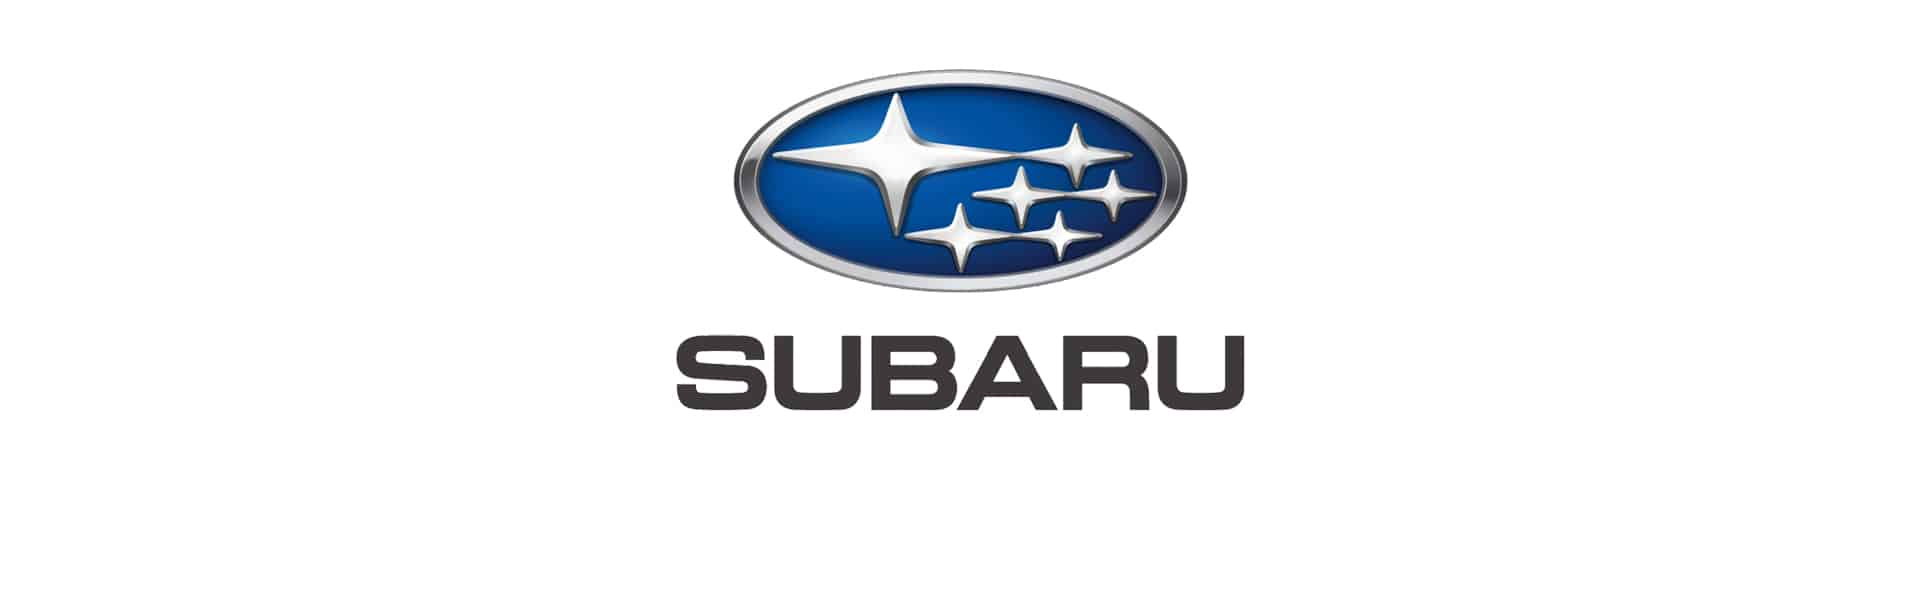 The Subaru logo